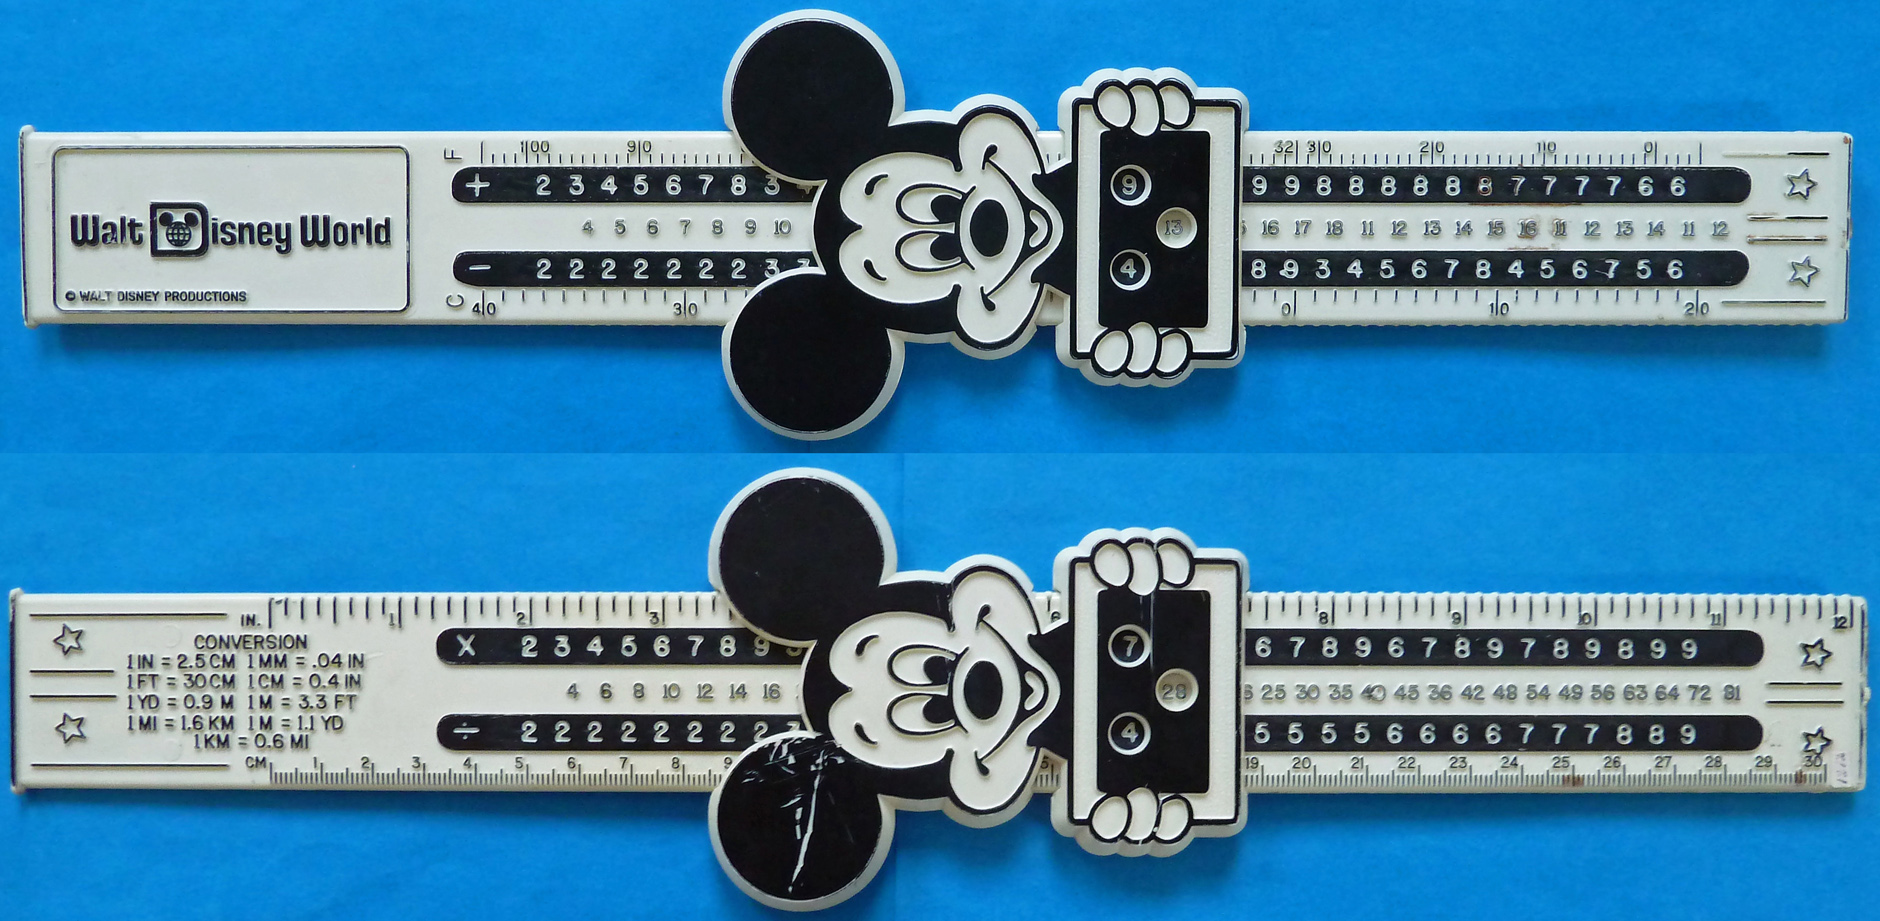 Disney Mickey Mouse Disney World Calculator/Coversion Aid